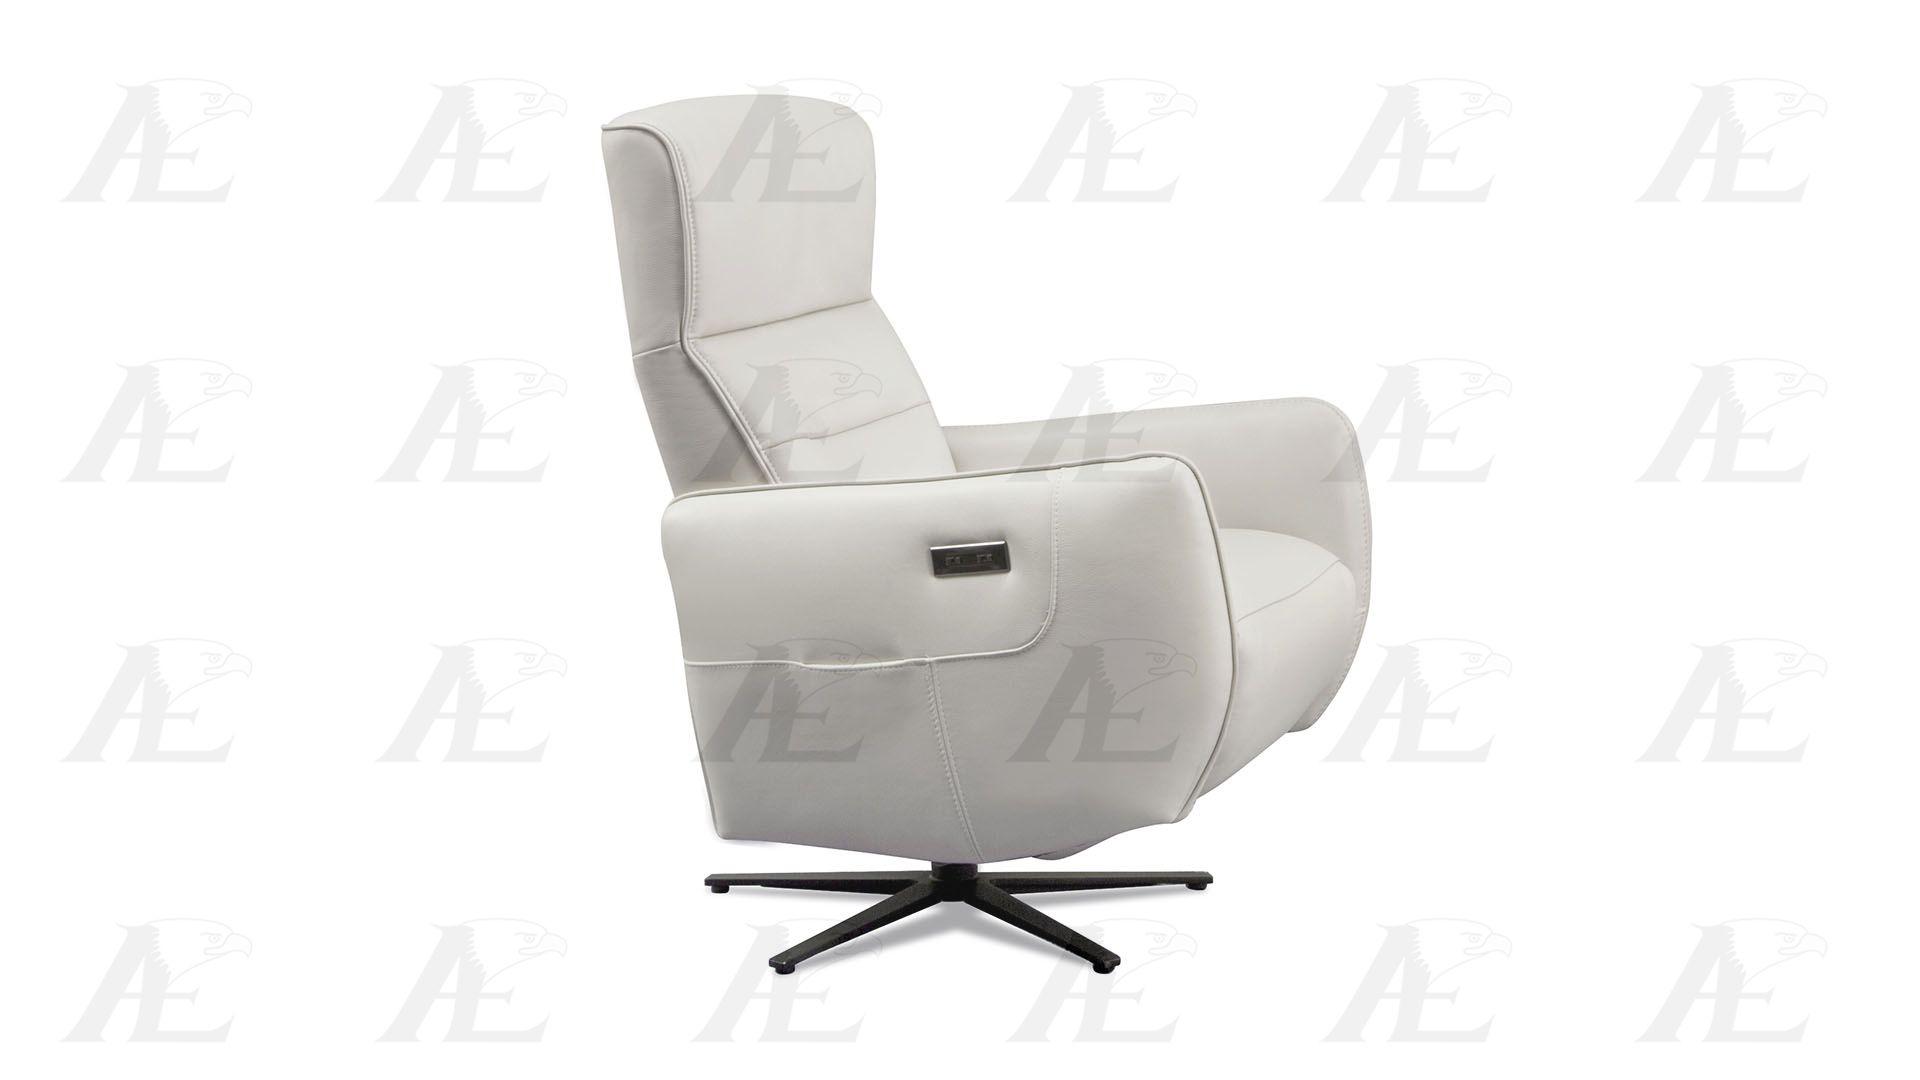 

    
EK-CH036-FROST American Eagle Furniture Reclining Chair
